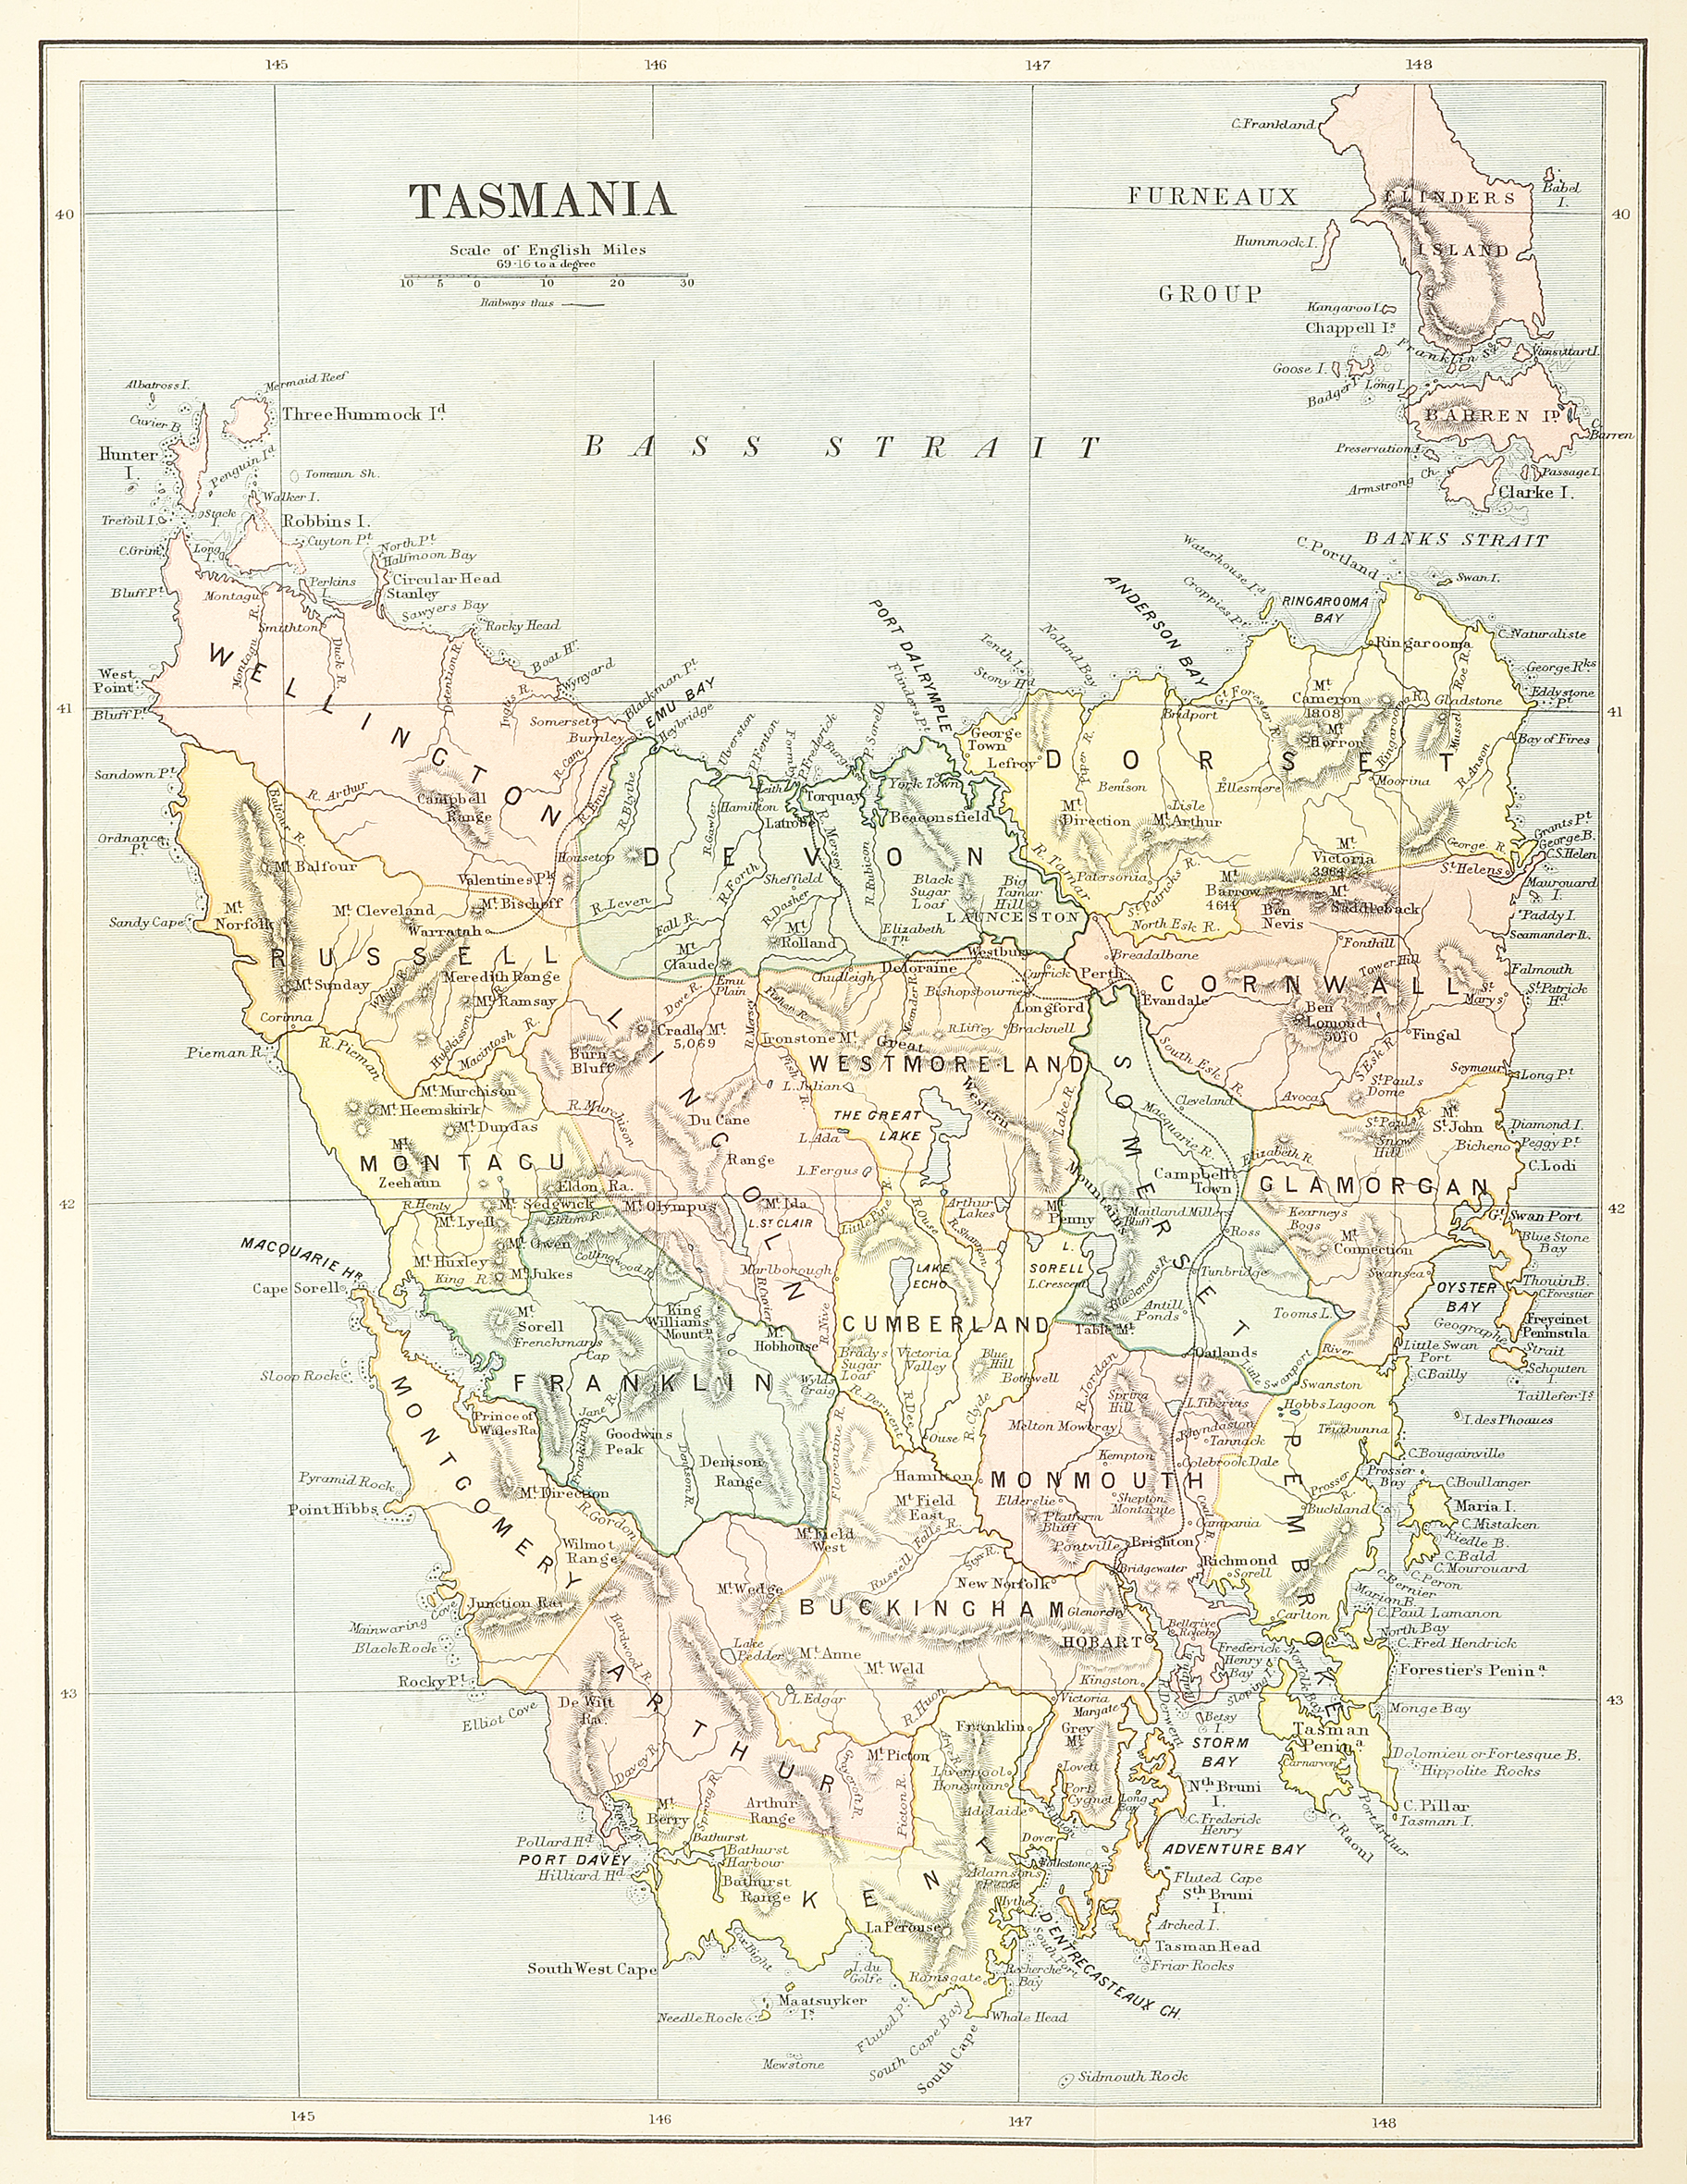 Tasmania - Antique Map from 1886